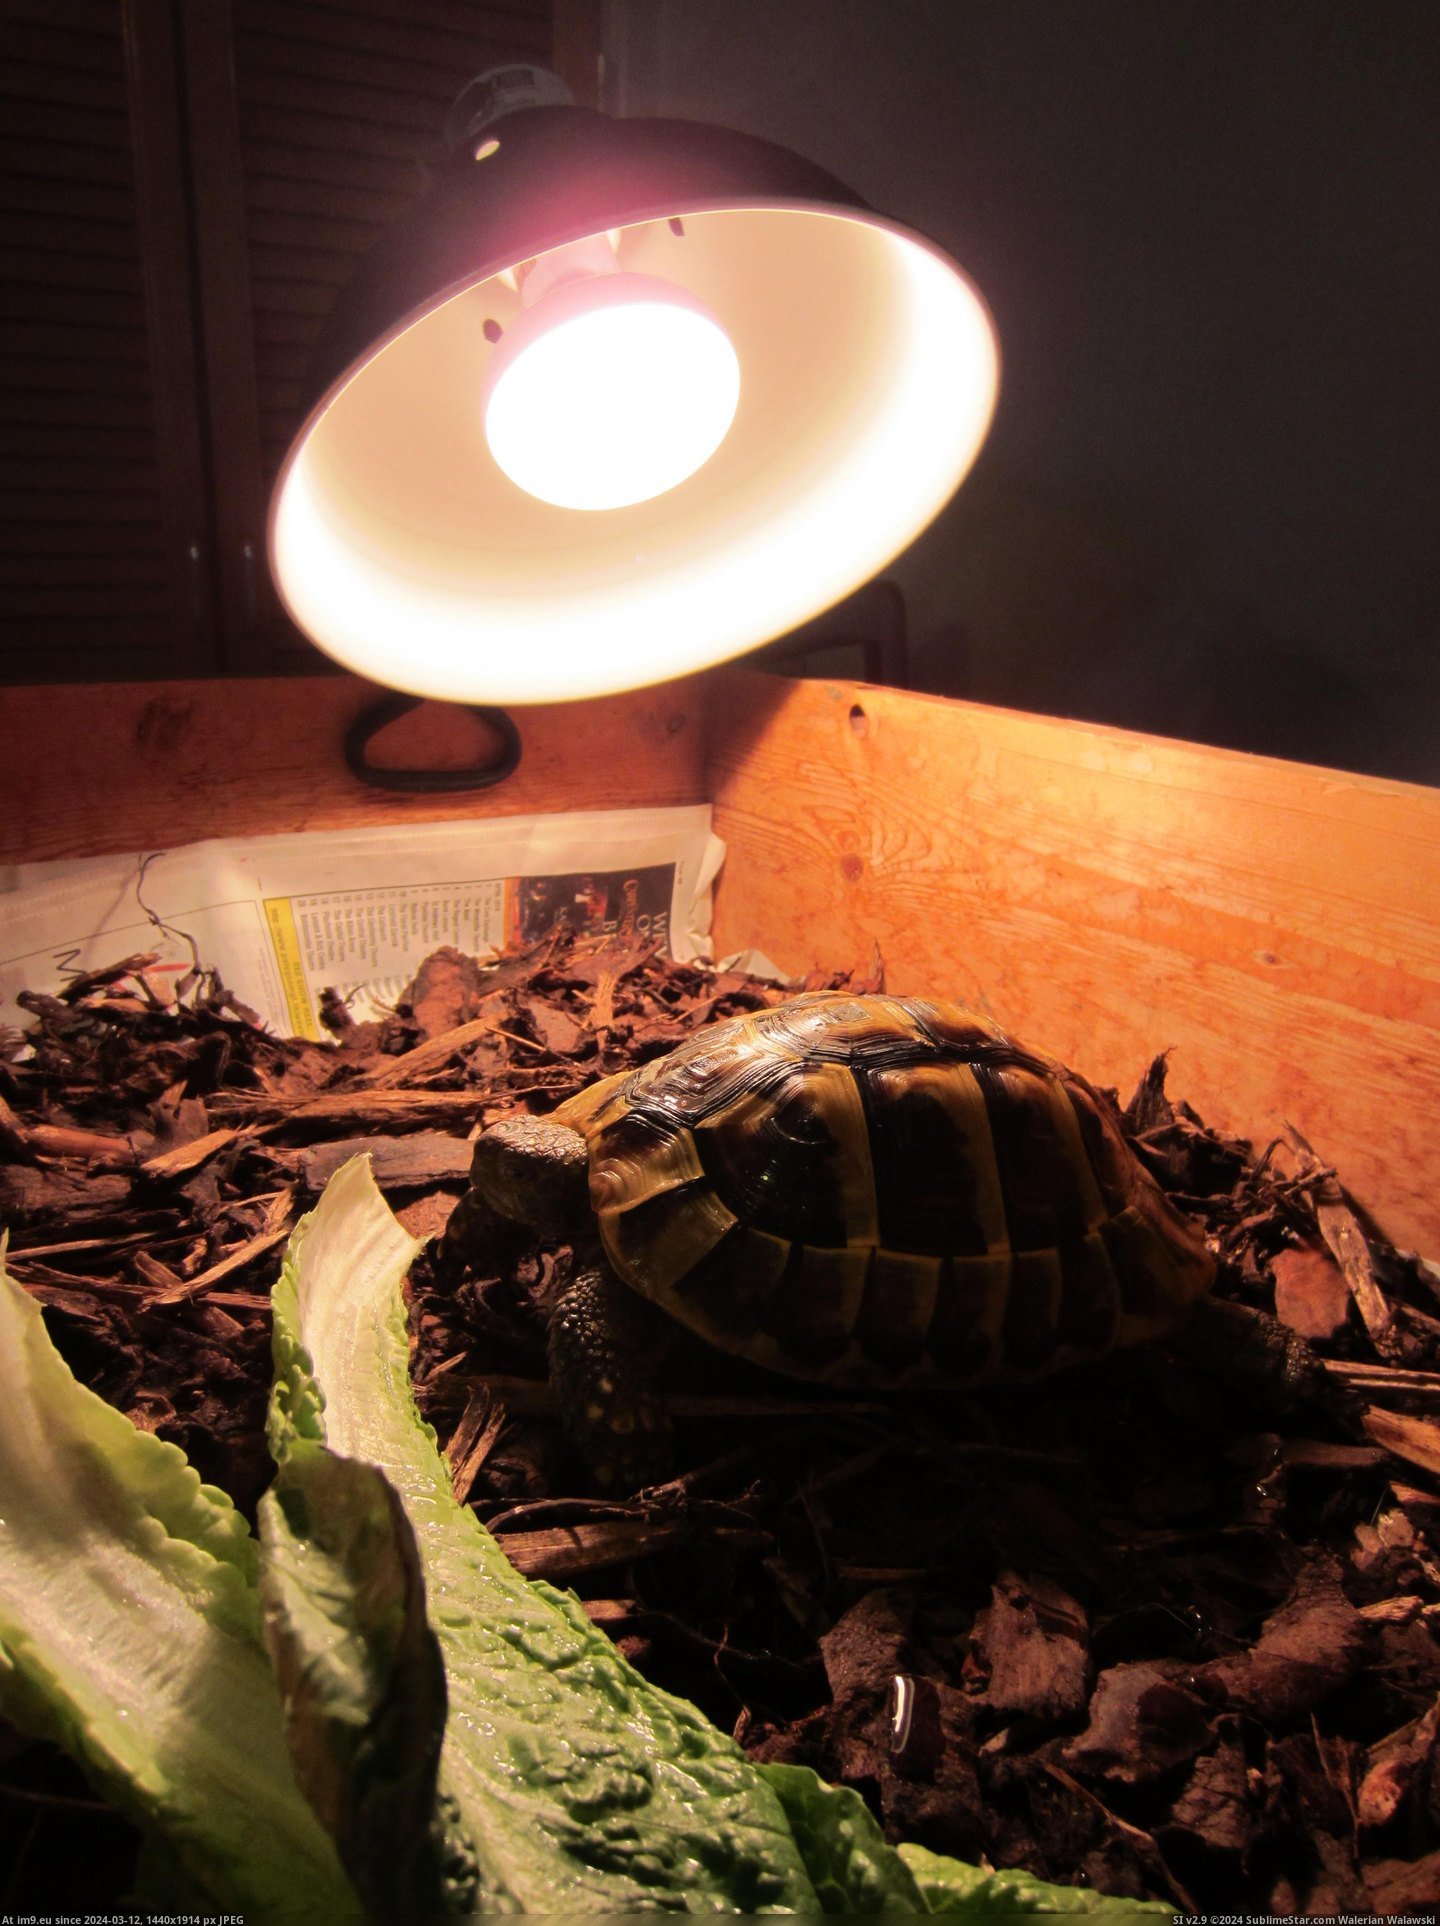 #May #Woke #Tortoise #Hibernating #Charlie #Fridge [Pics] You may remember Charlie the tortoise hibernating in the fridge? Well, today he woke up.. 3 Pic. (Image of album My r/PICS favs))